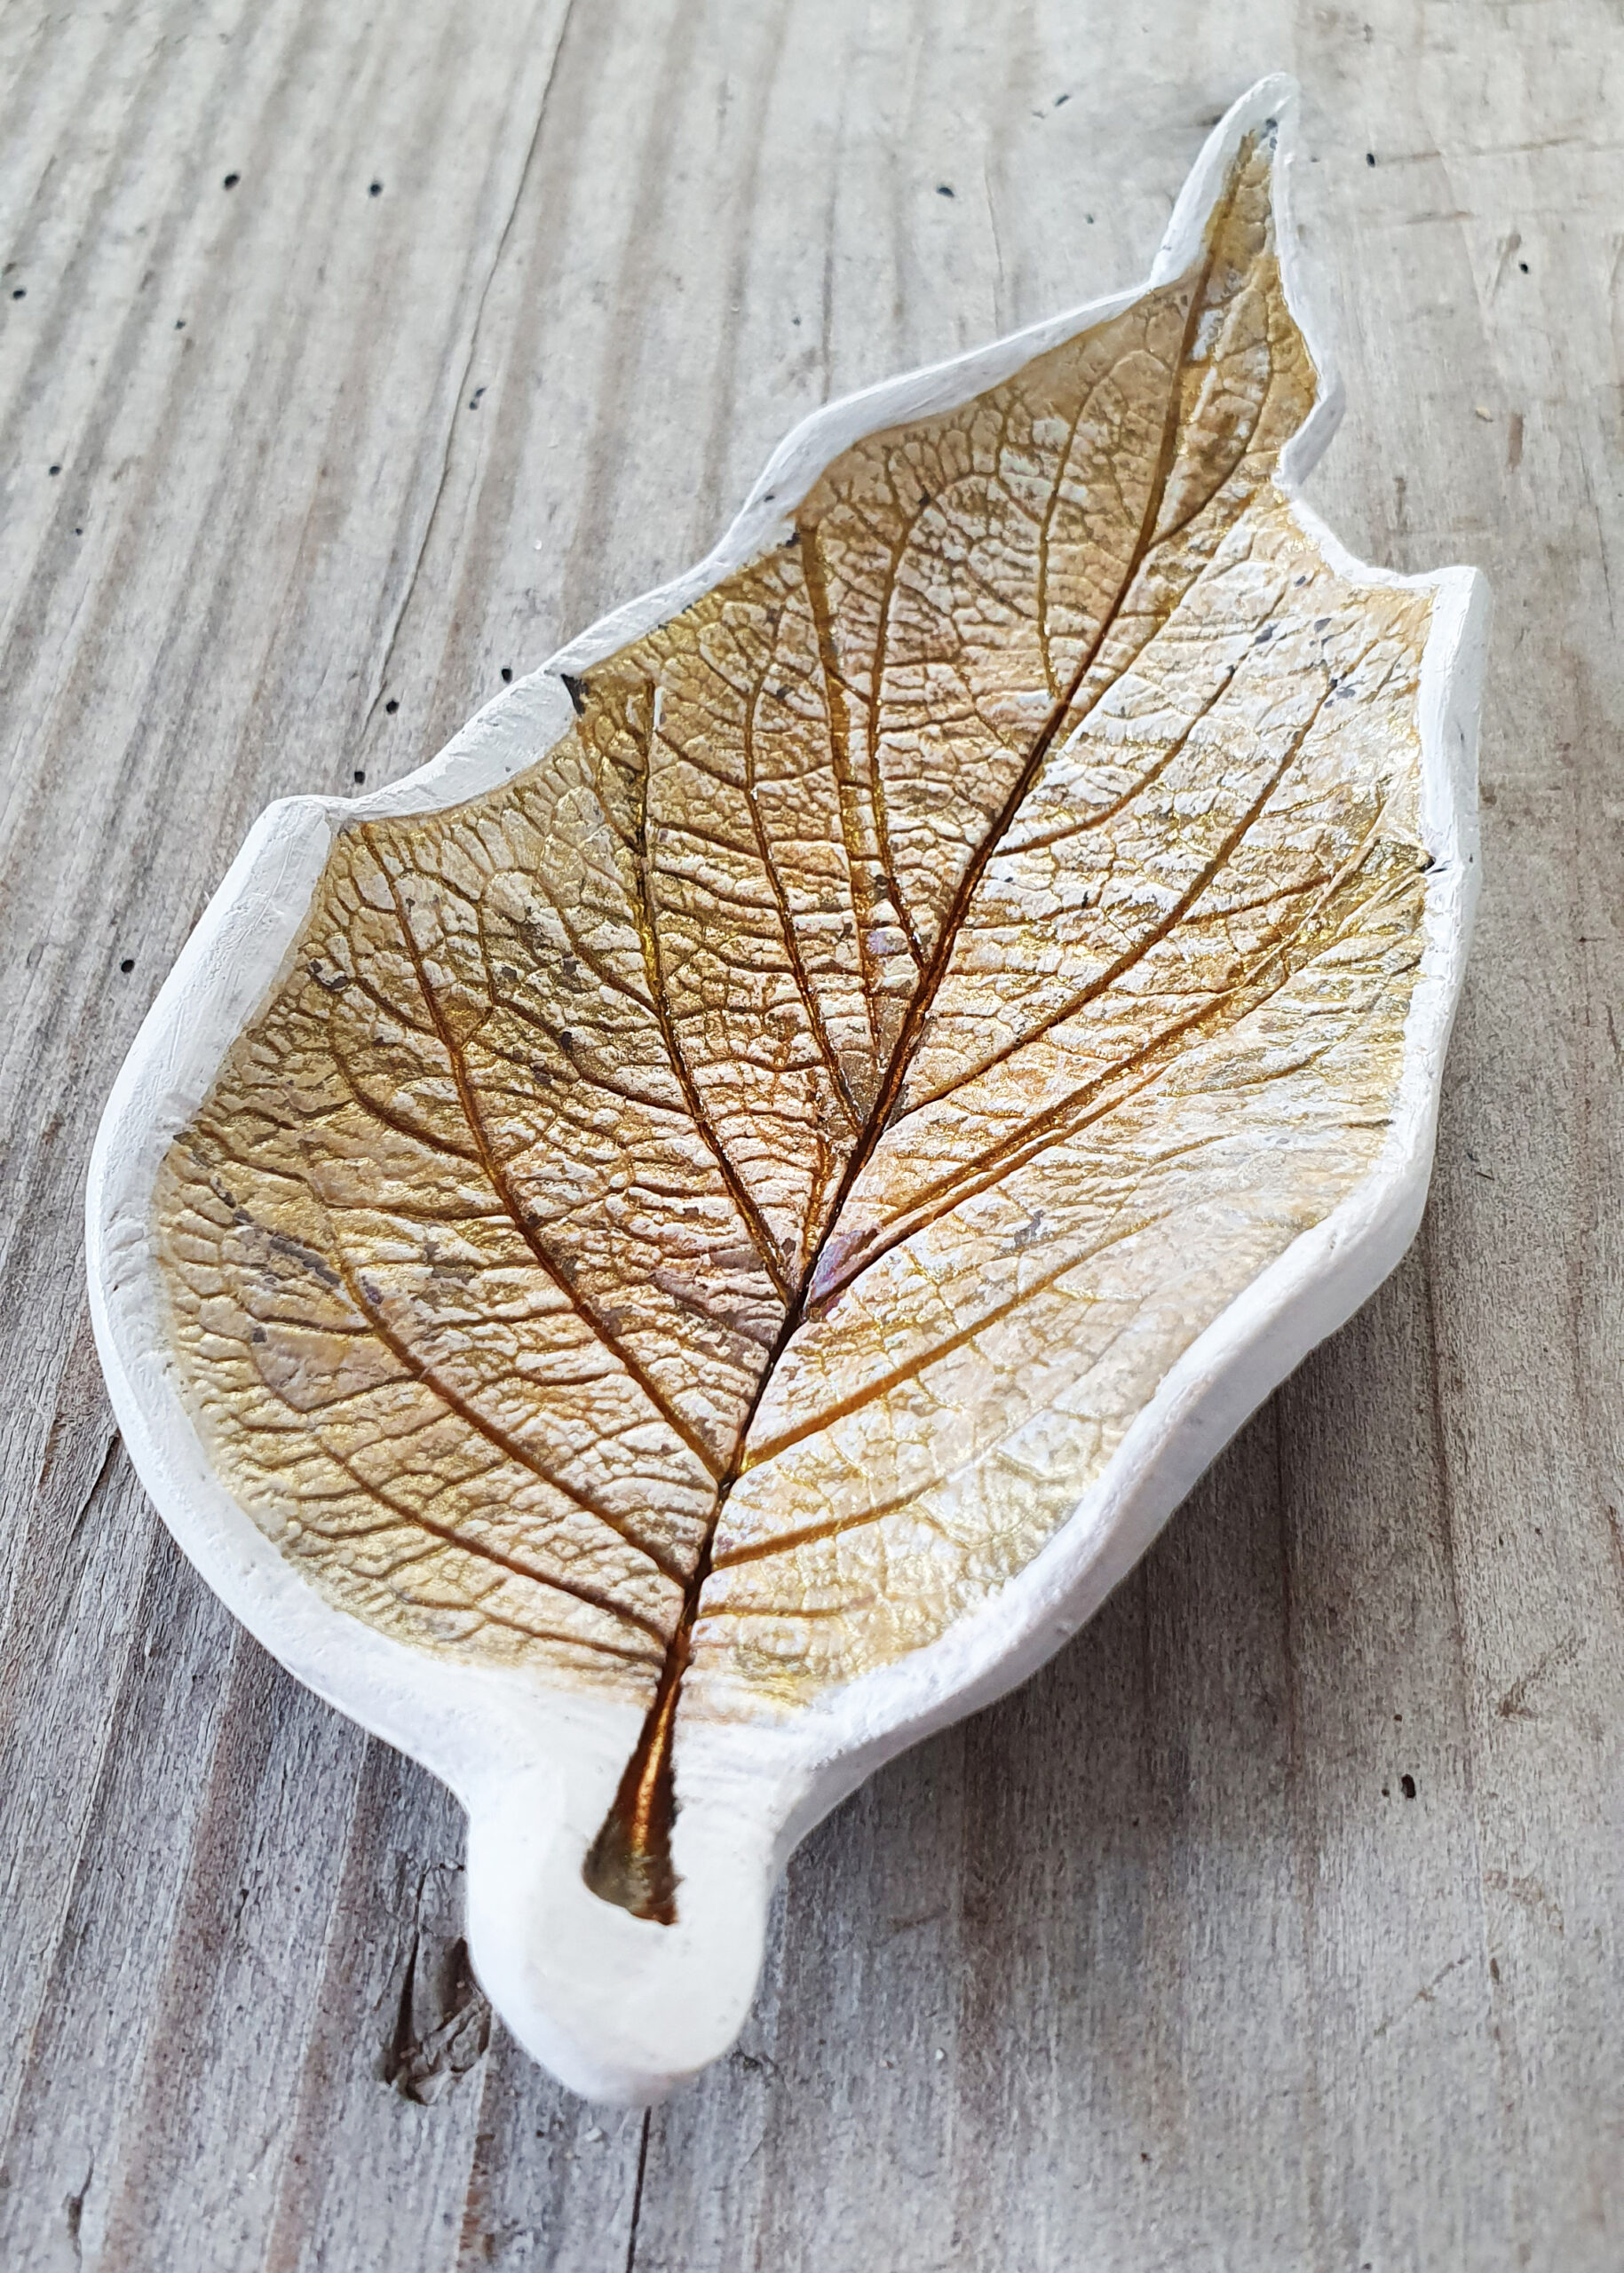 clay leaf made of Brugmansia, angels trumpet